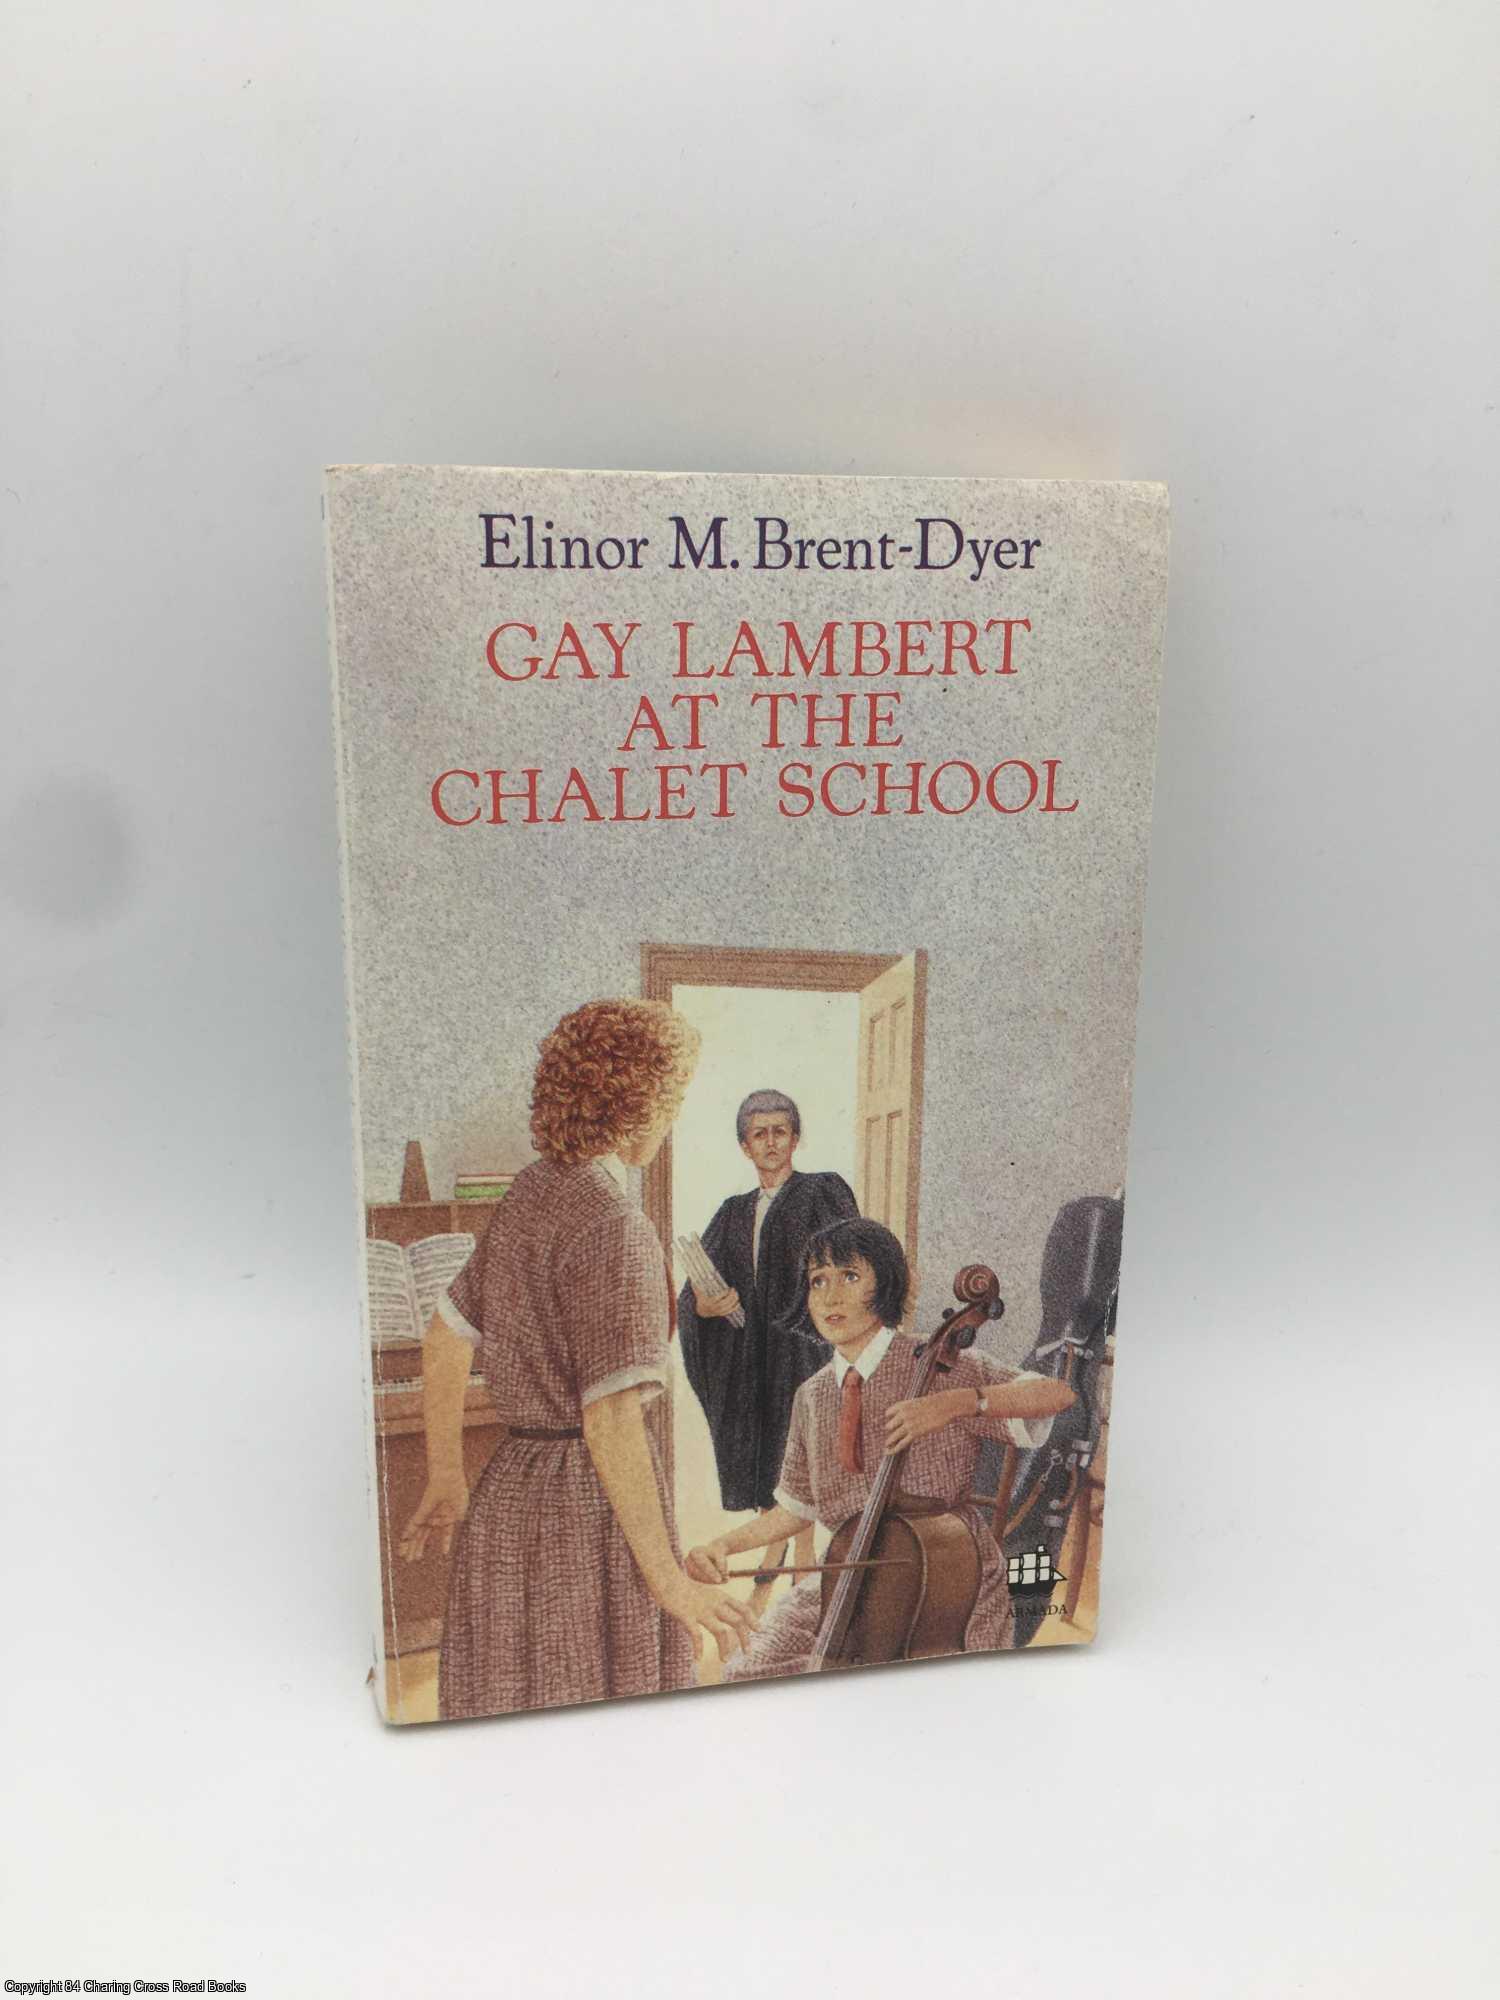 Brent-Dyer, Elinor M. - Gay Lambert at the Chalet School